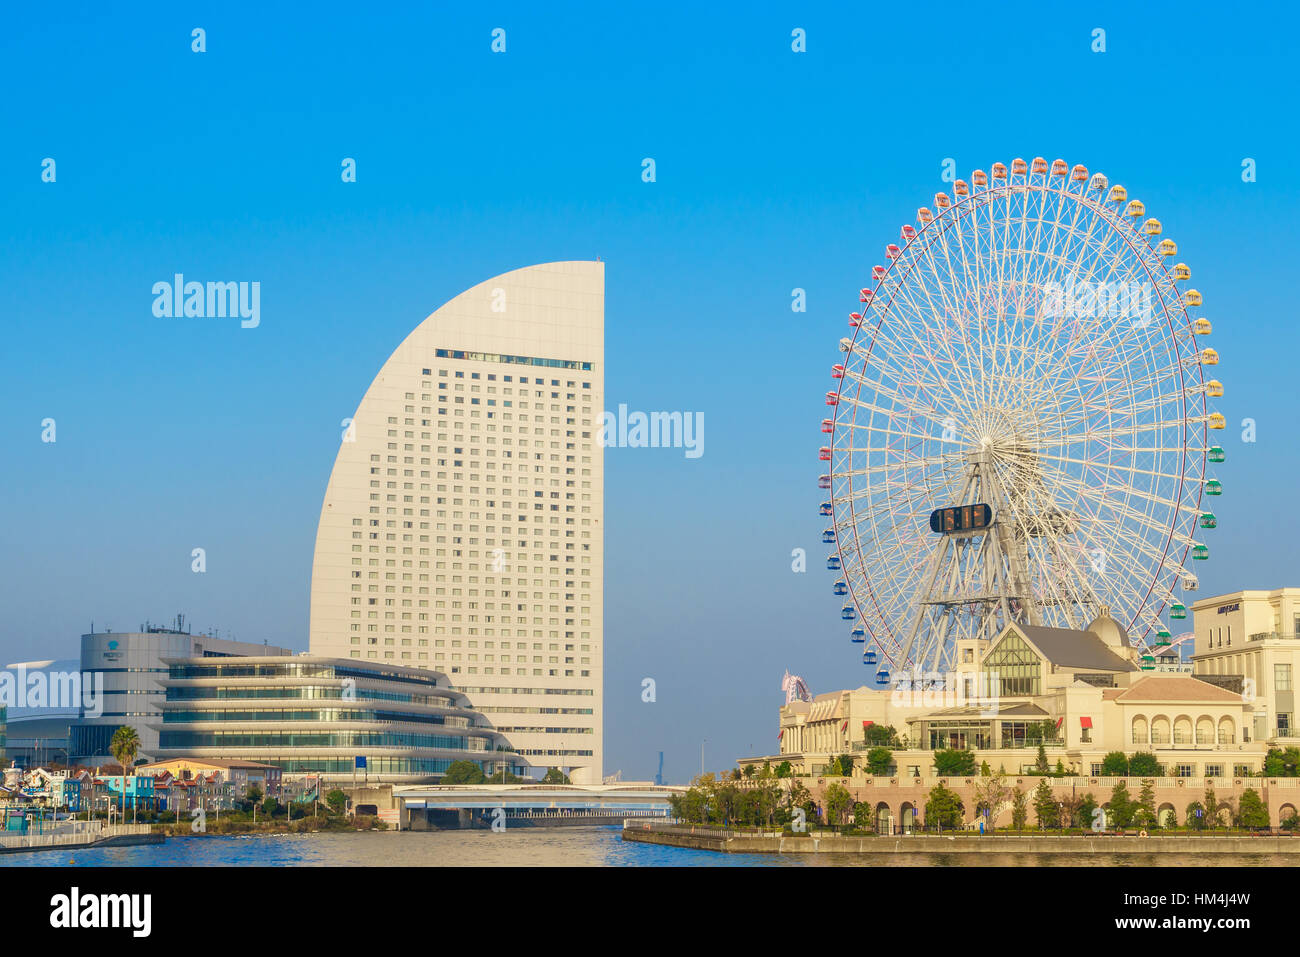 Yokohama,Japan - November 24,2015 : Ferris wheel at cosmo world fun park at minato mirai , Yokohama is the third biggest city in Japan. Stock Photo